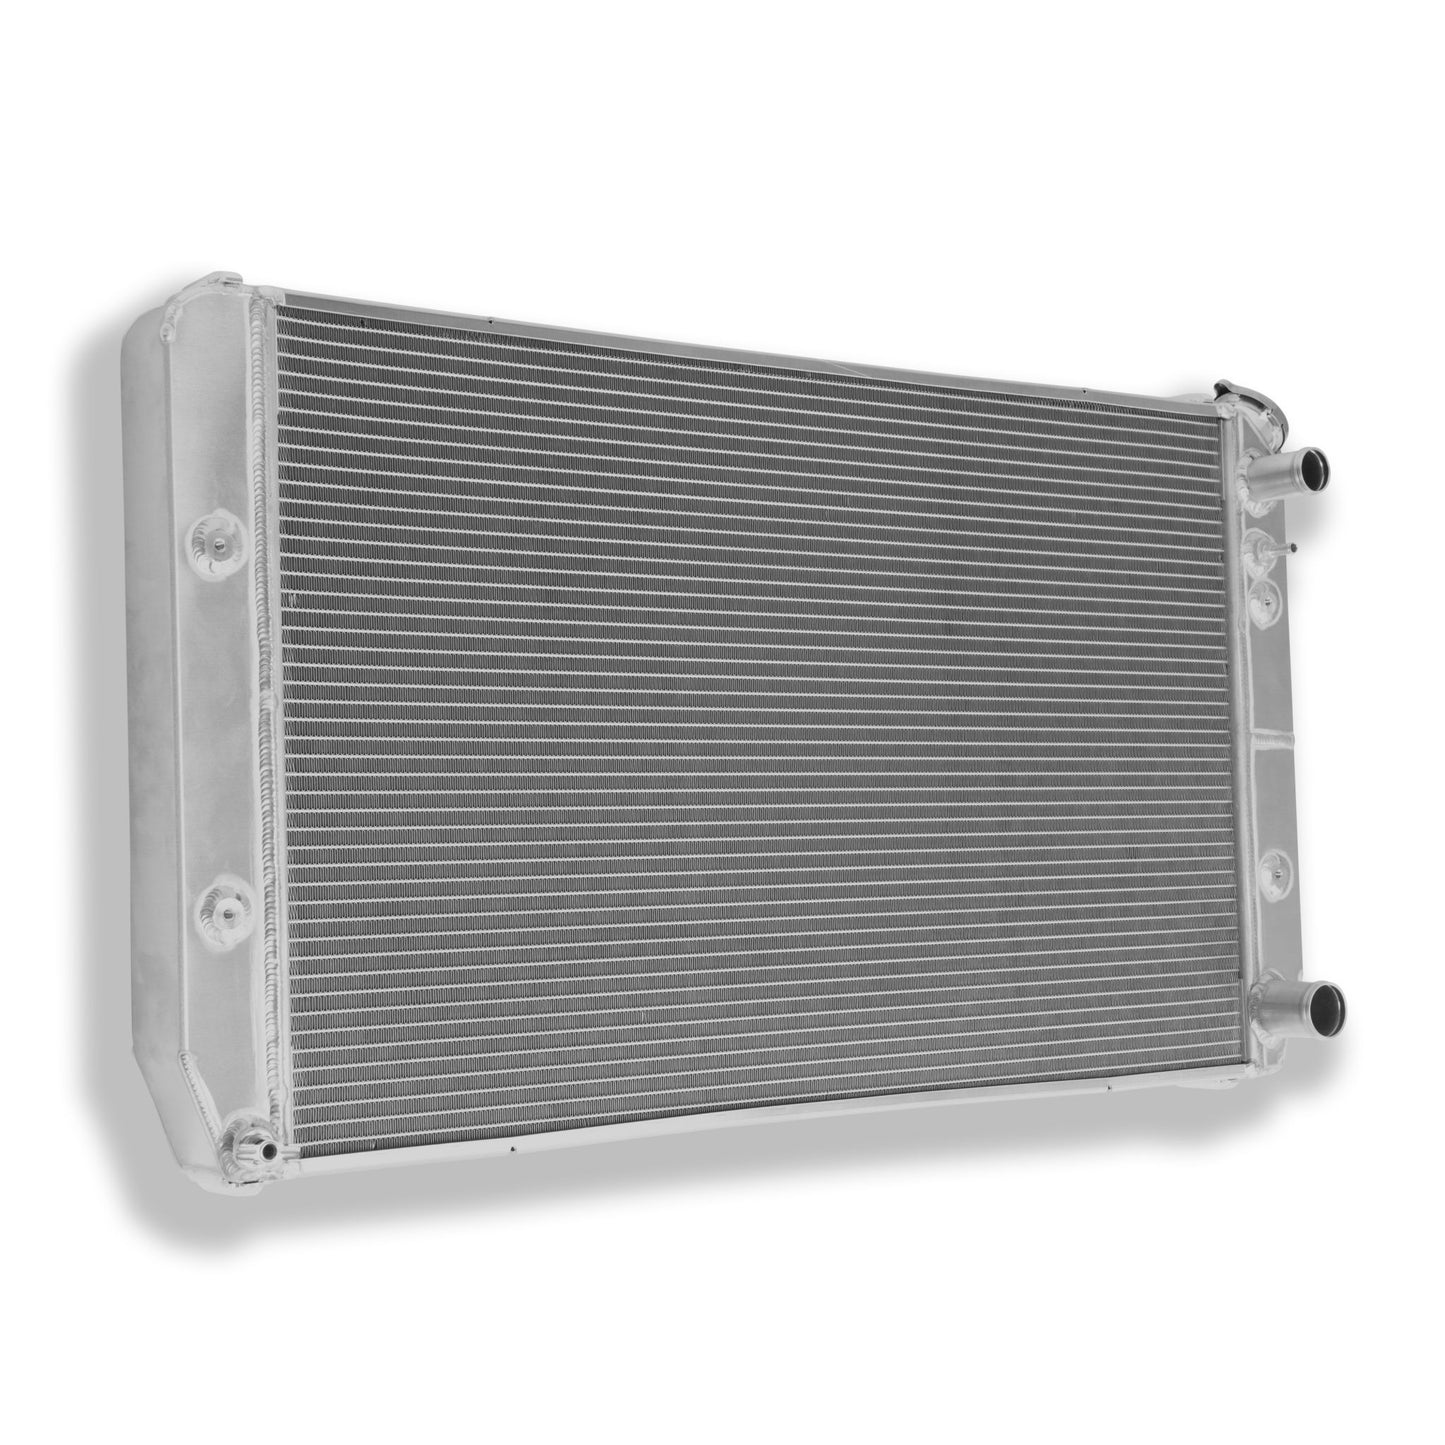 Flex-A-Lite - Extruded Core Radiator 315201